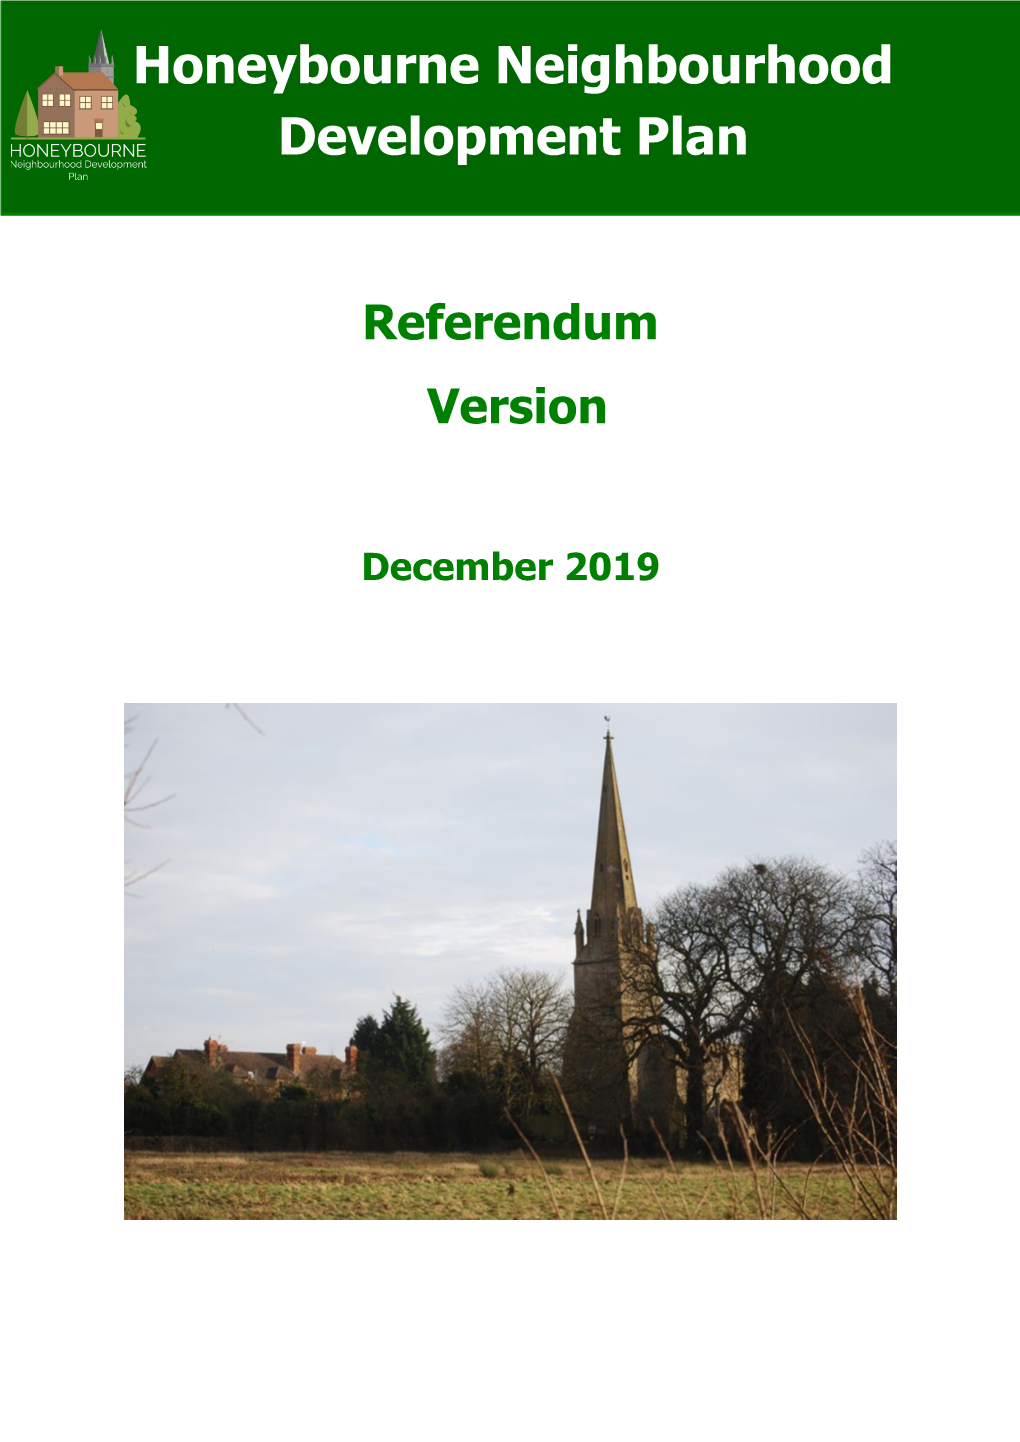 Pdf Honeybourne Neighbourhood Plan, Referendum Version